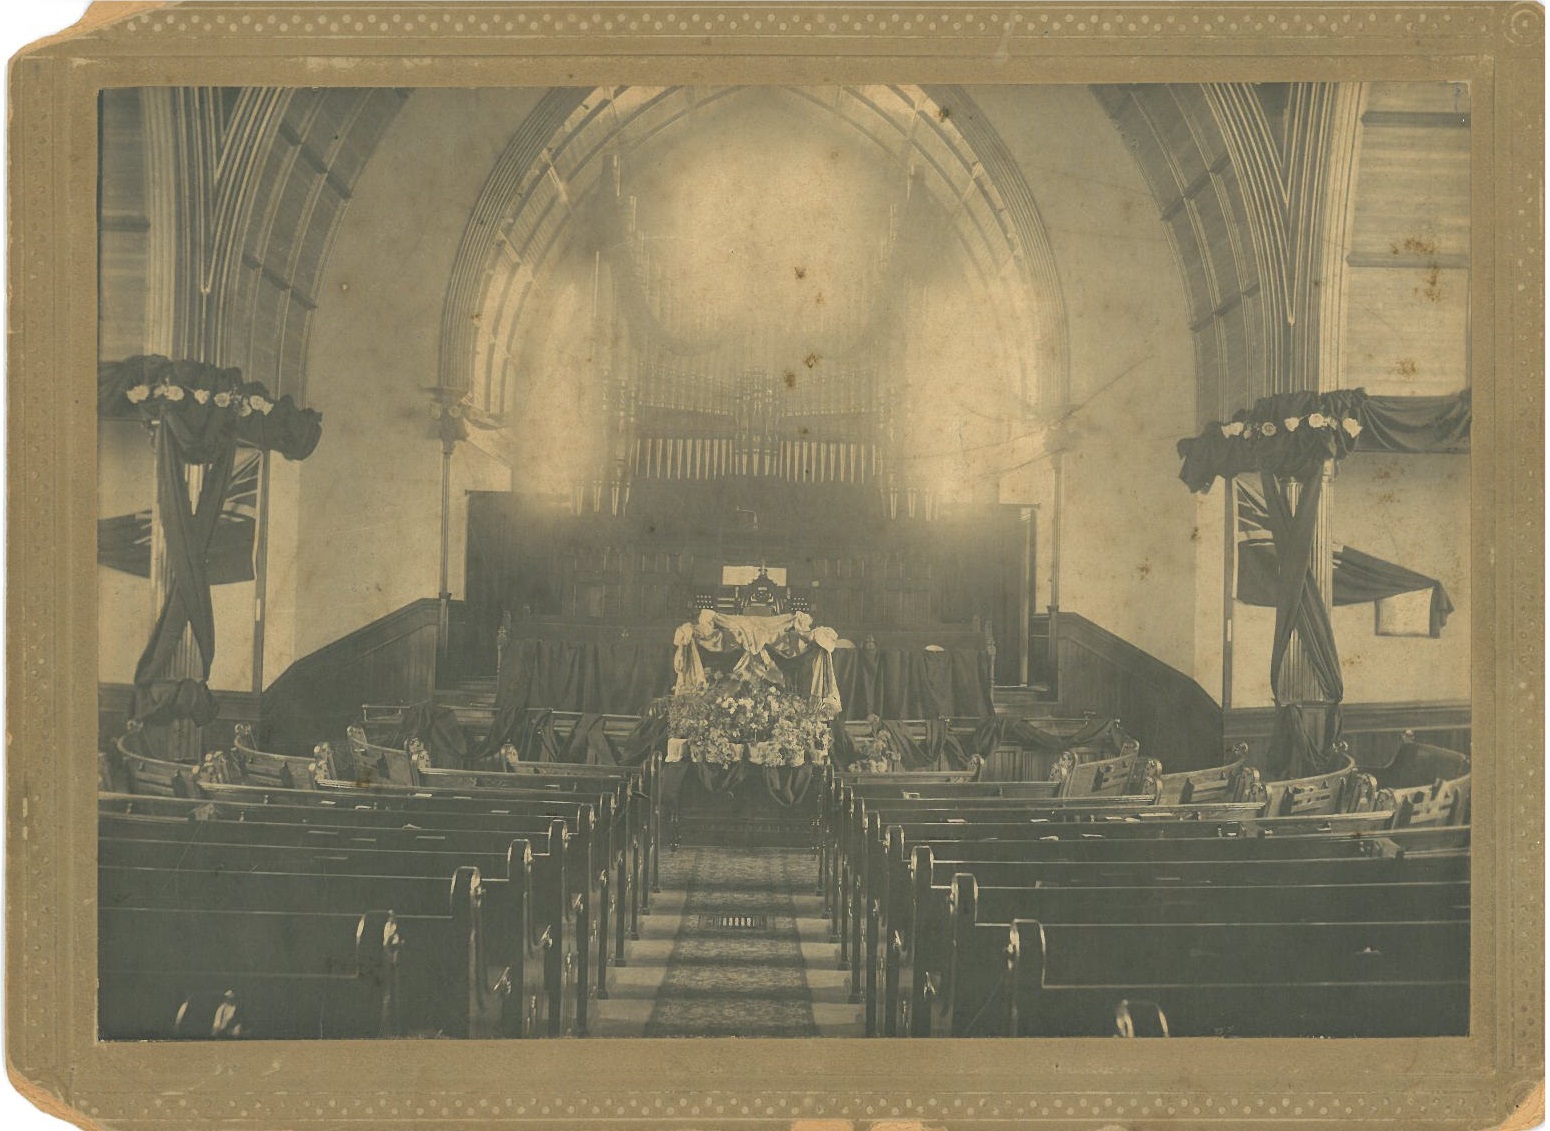 The Rebuilding of St. John’s Presbyterian Church, Windsor, NS